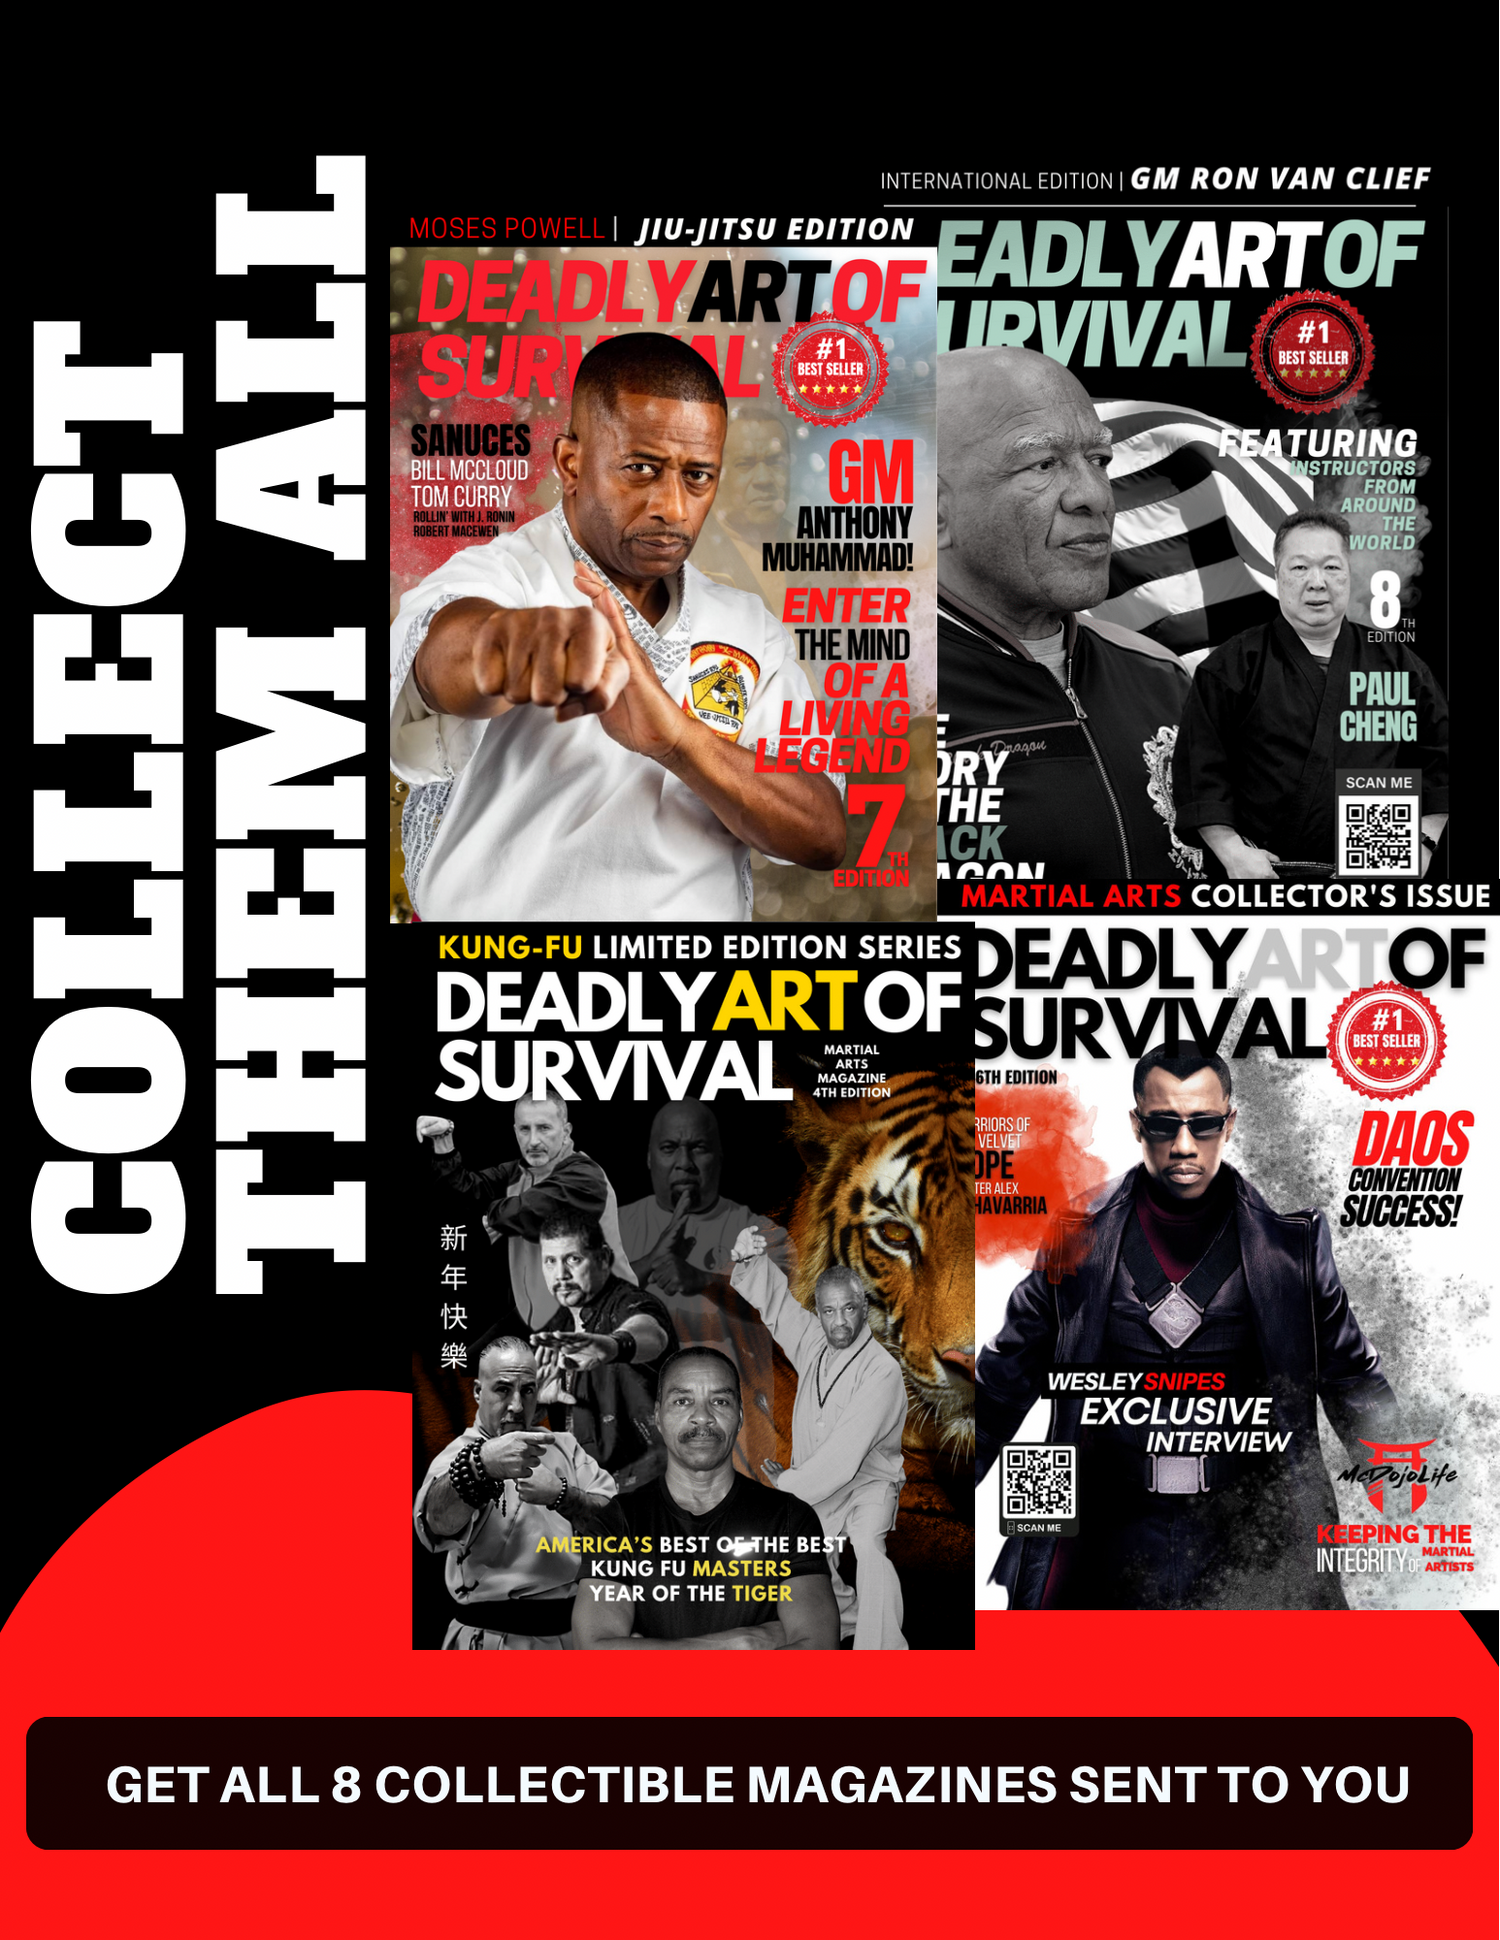 Collect 8 DAOS Magazines deadlyartofsurvival.com